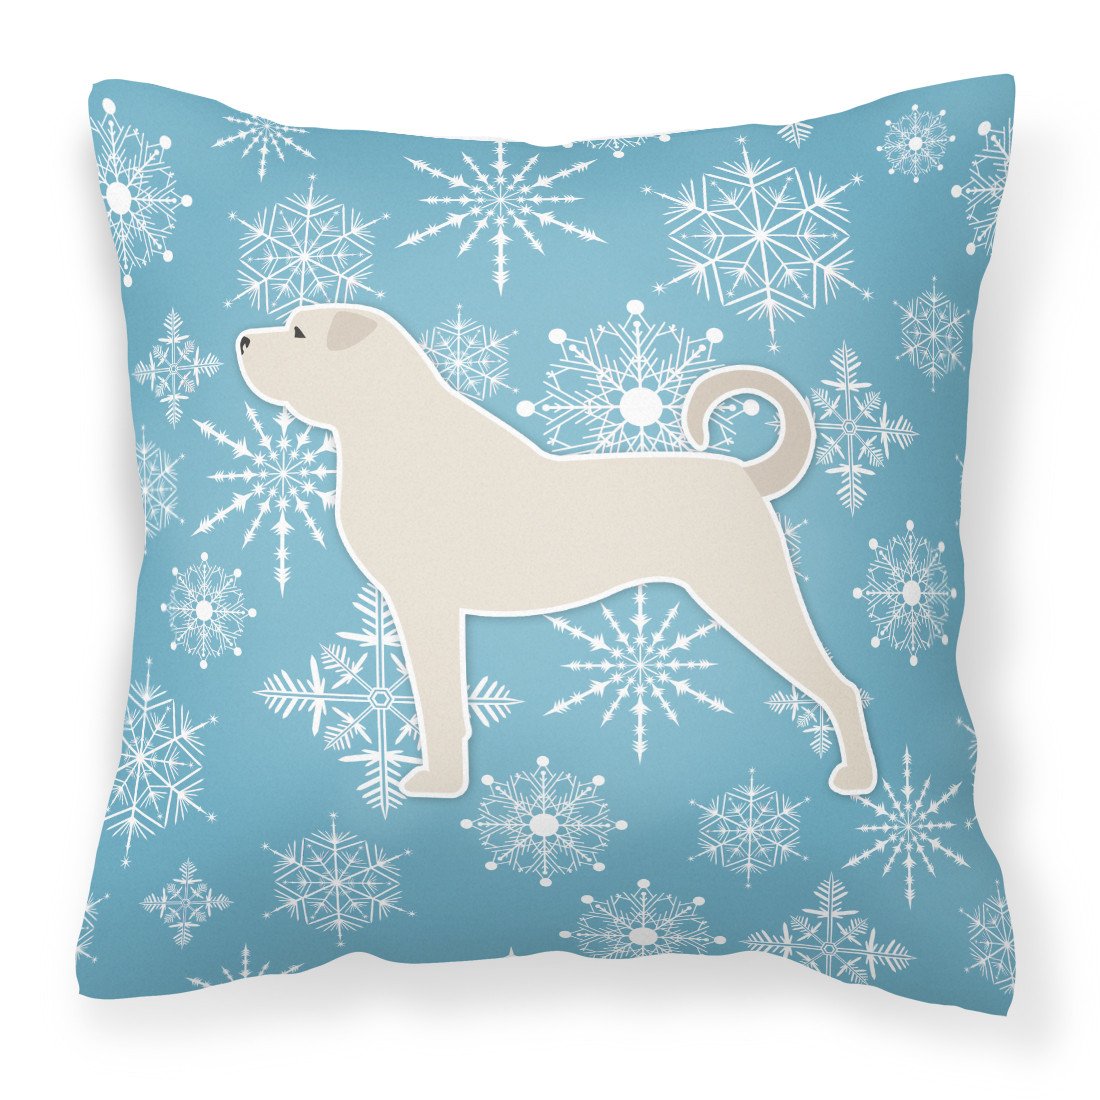 Winter Snowflake Anatolian Shepherd Fabric Decorative Pillow BB3577PW1818 by Caroline's Treasures